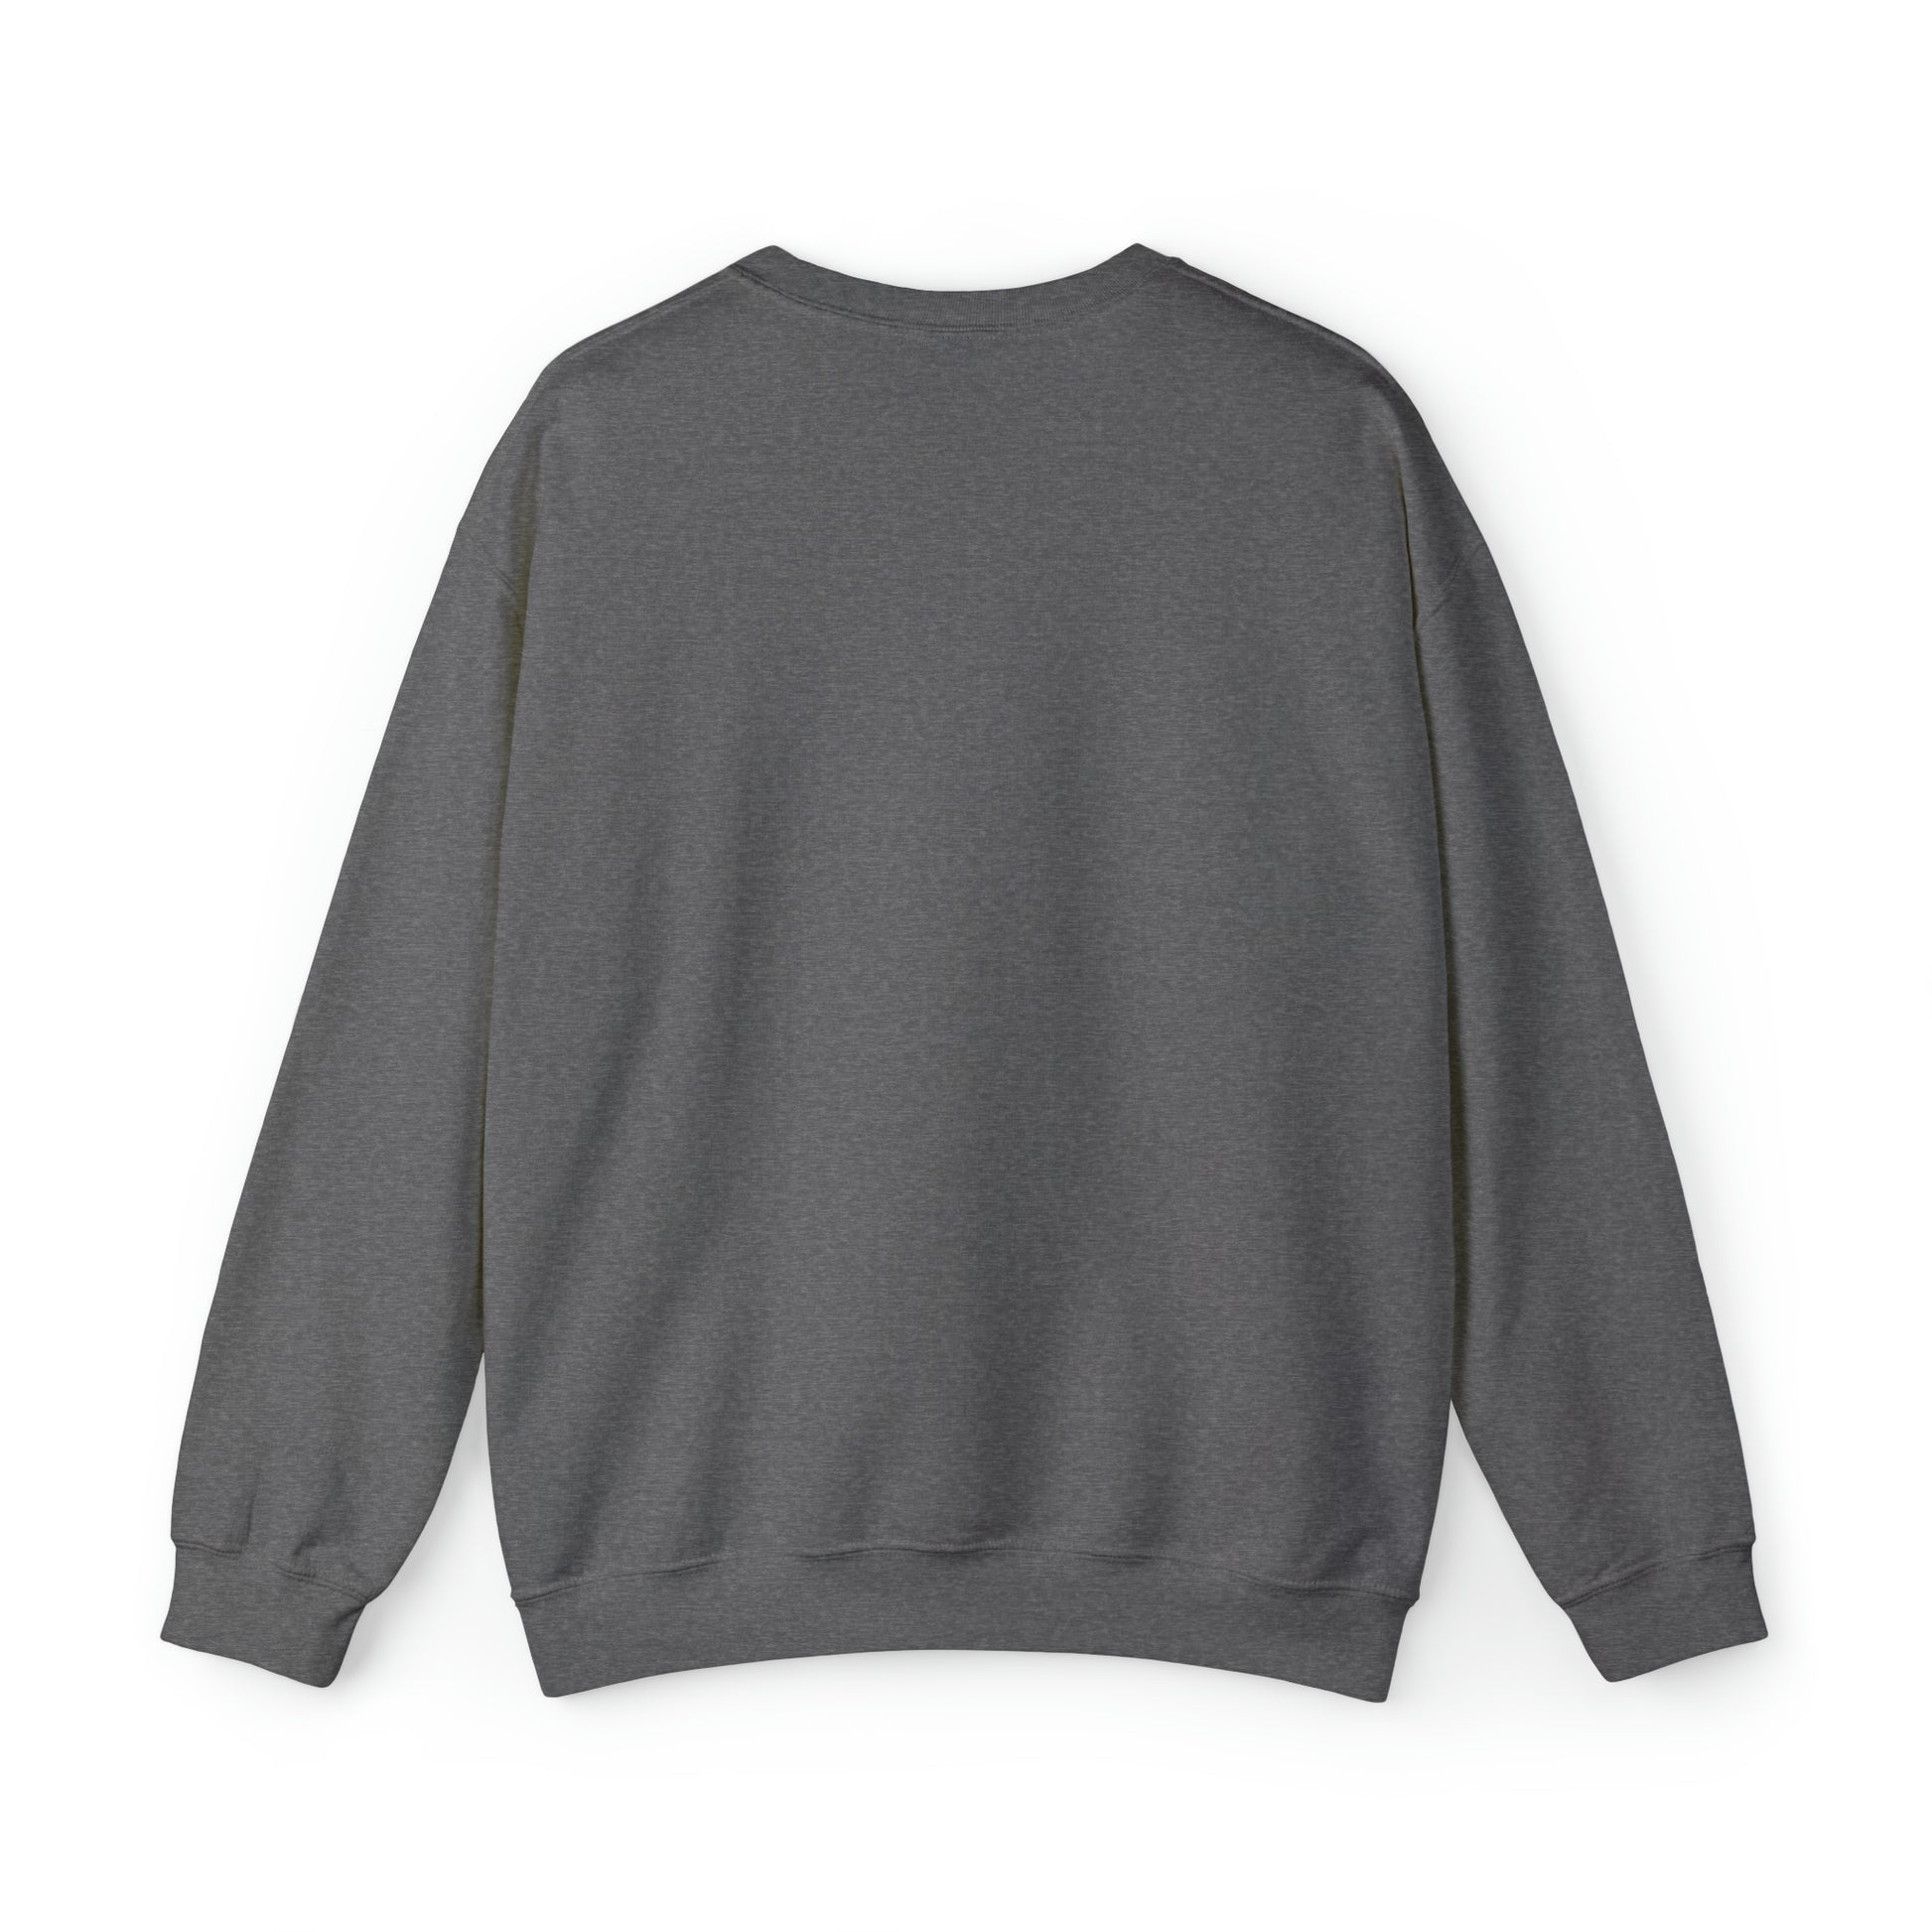 WONDER WOMAN Official Reversible WW Long Sleeve Sweatshirt T-Shirt Size  Medium